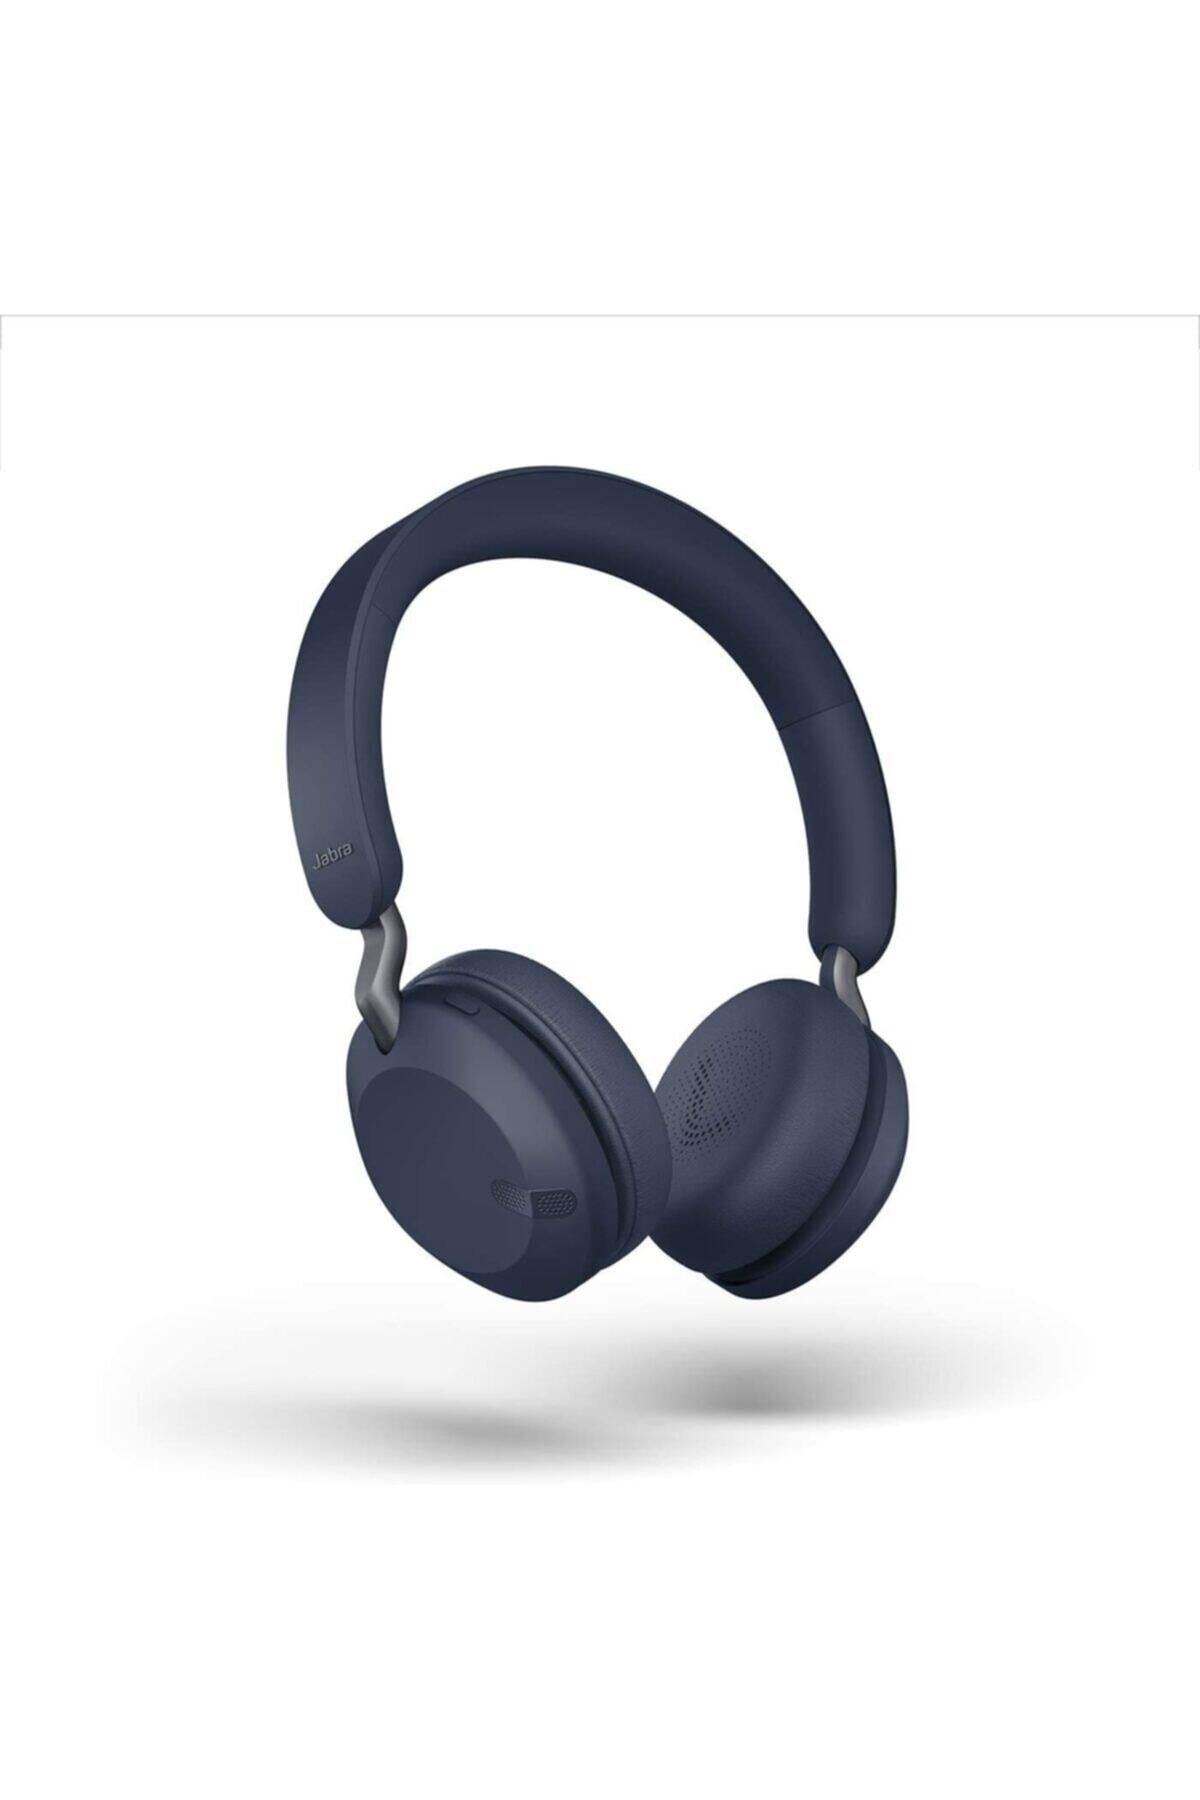 Jabra Elite 45h Kablosuz Kulaküstü Bluetooth Kulaklık Navy Mavi 5707055049828